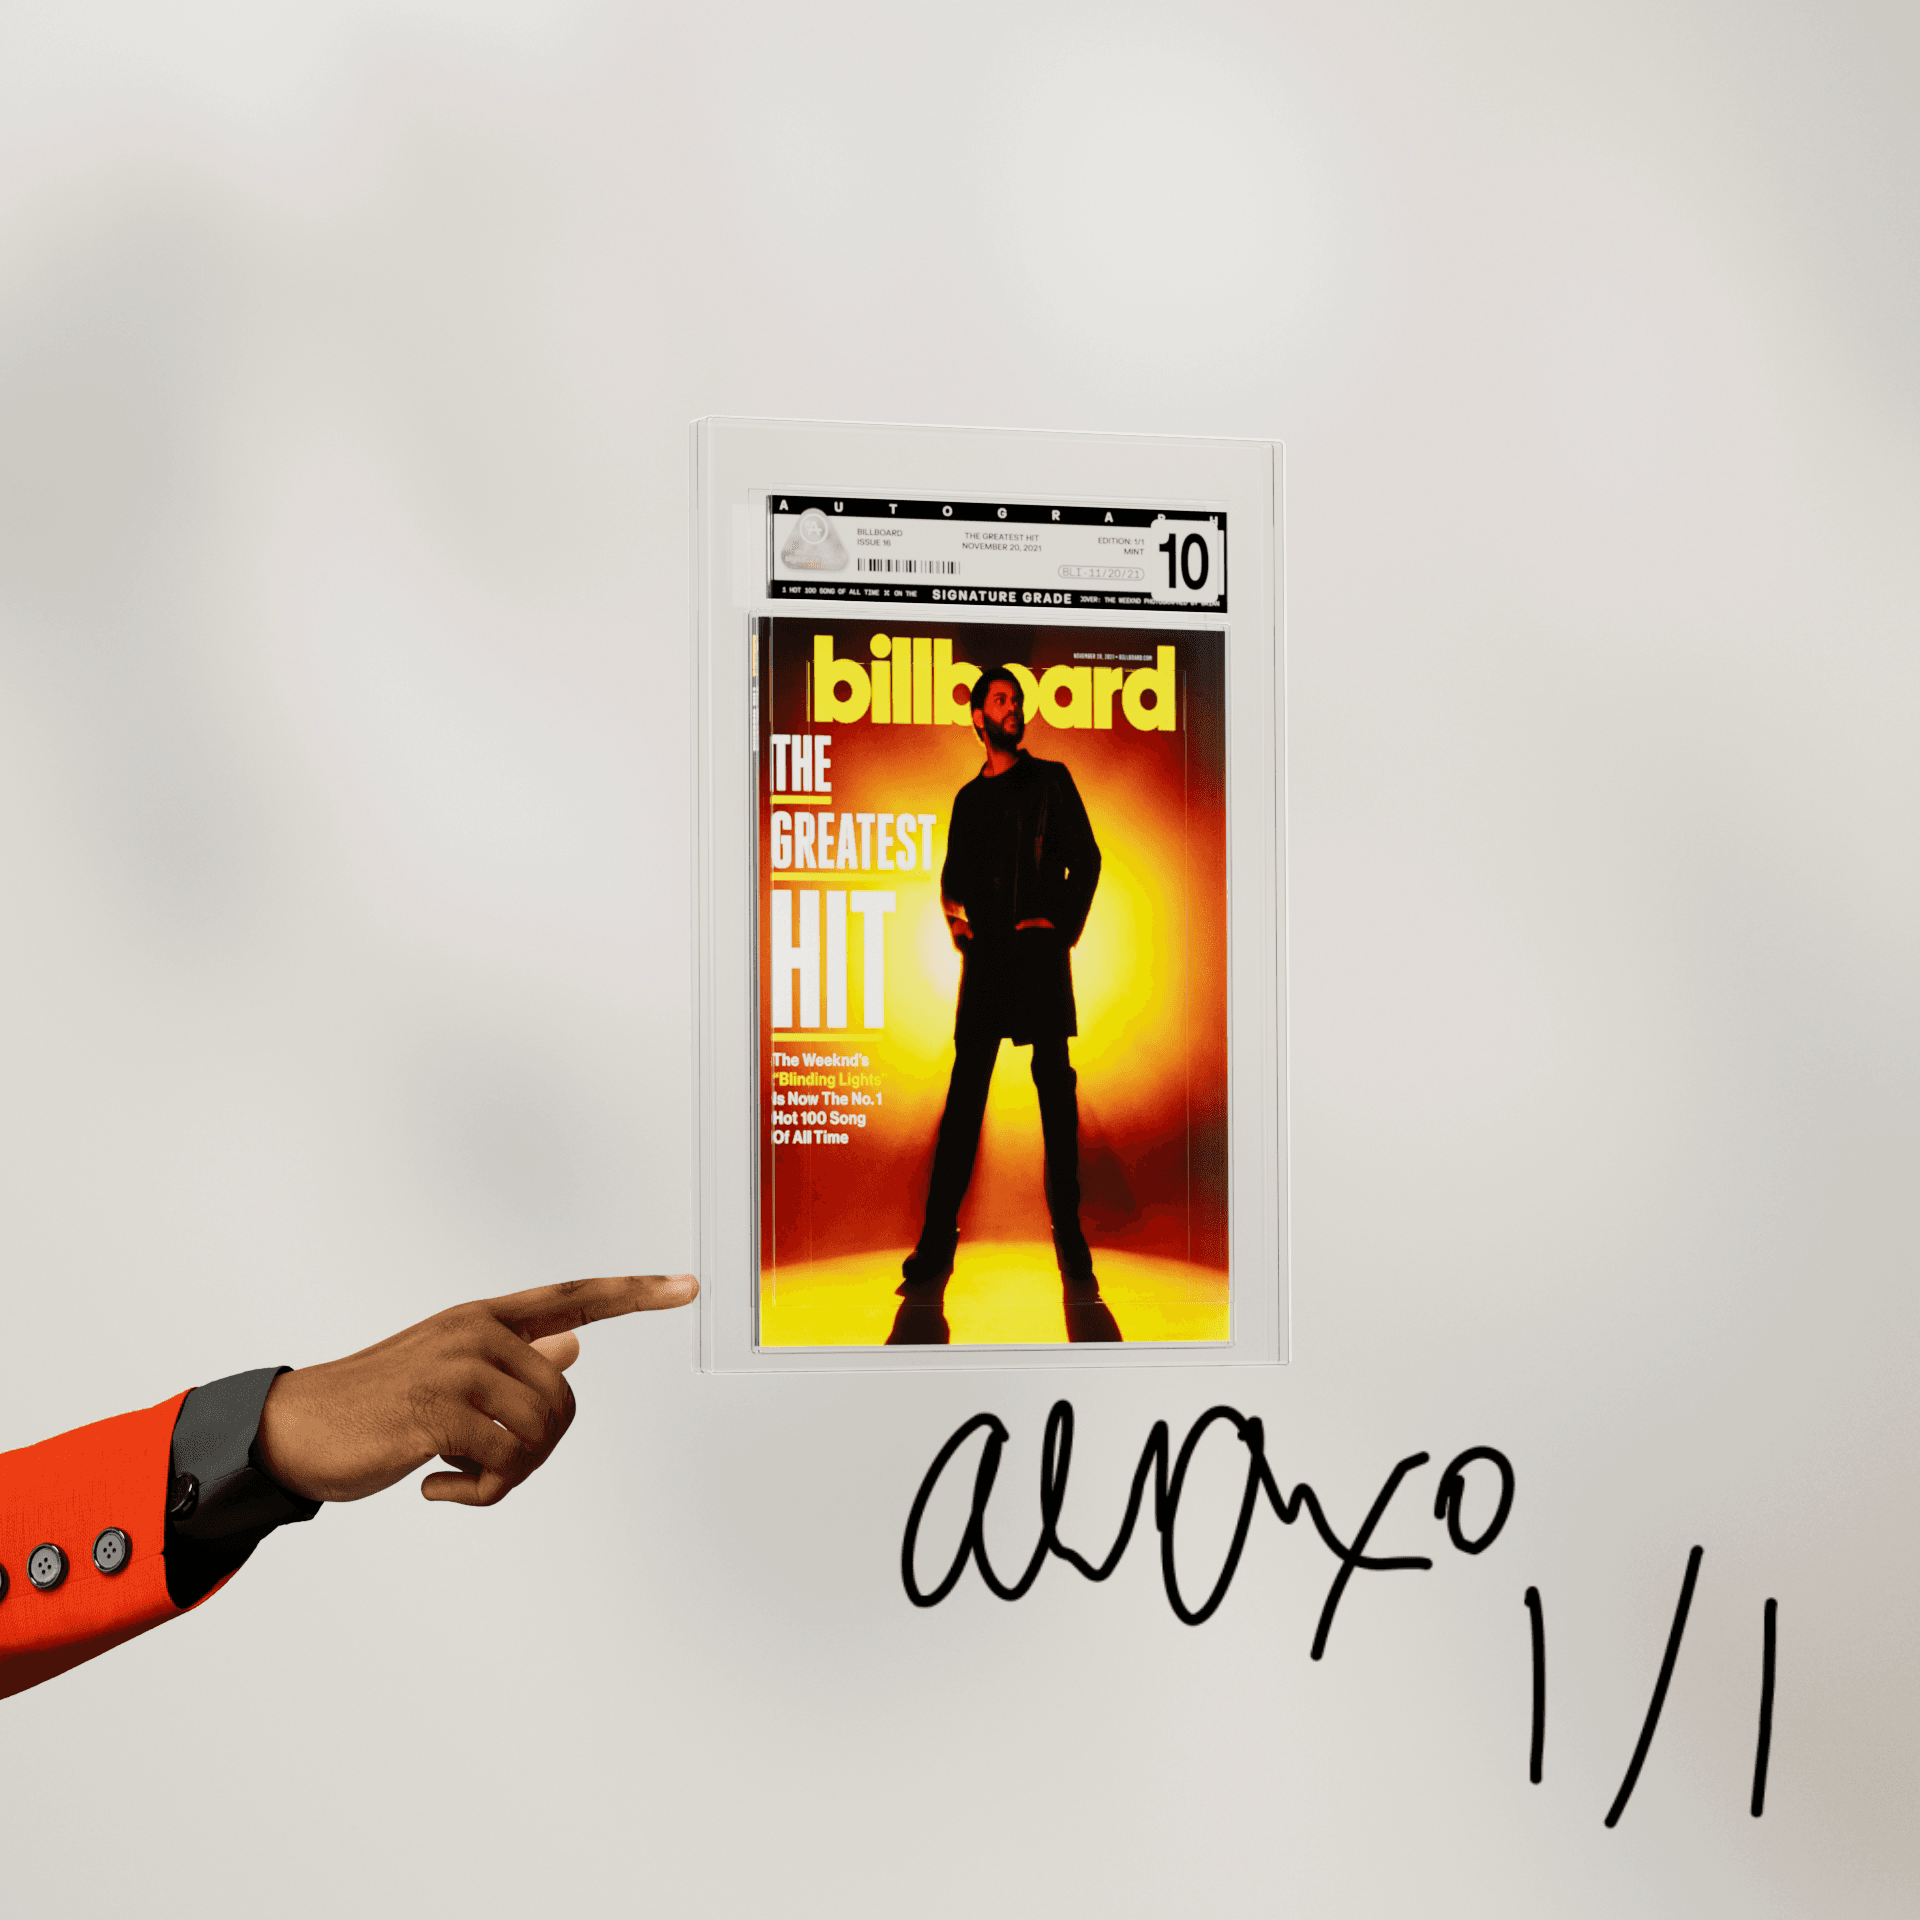 The Weeknd Signed Magazine #1